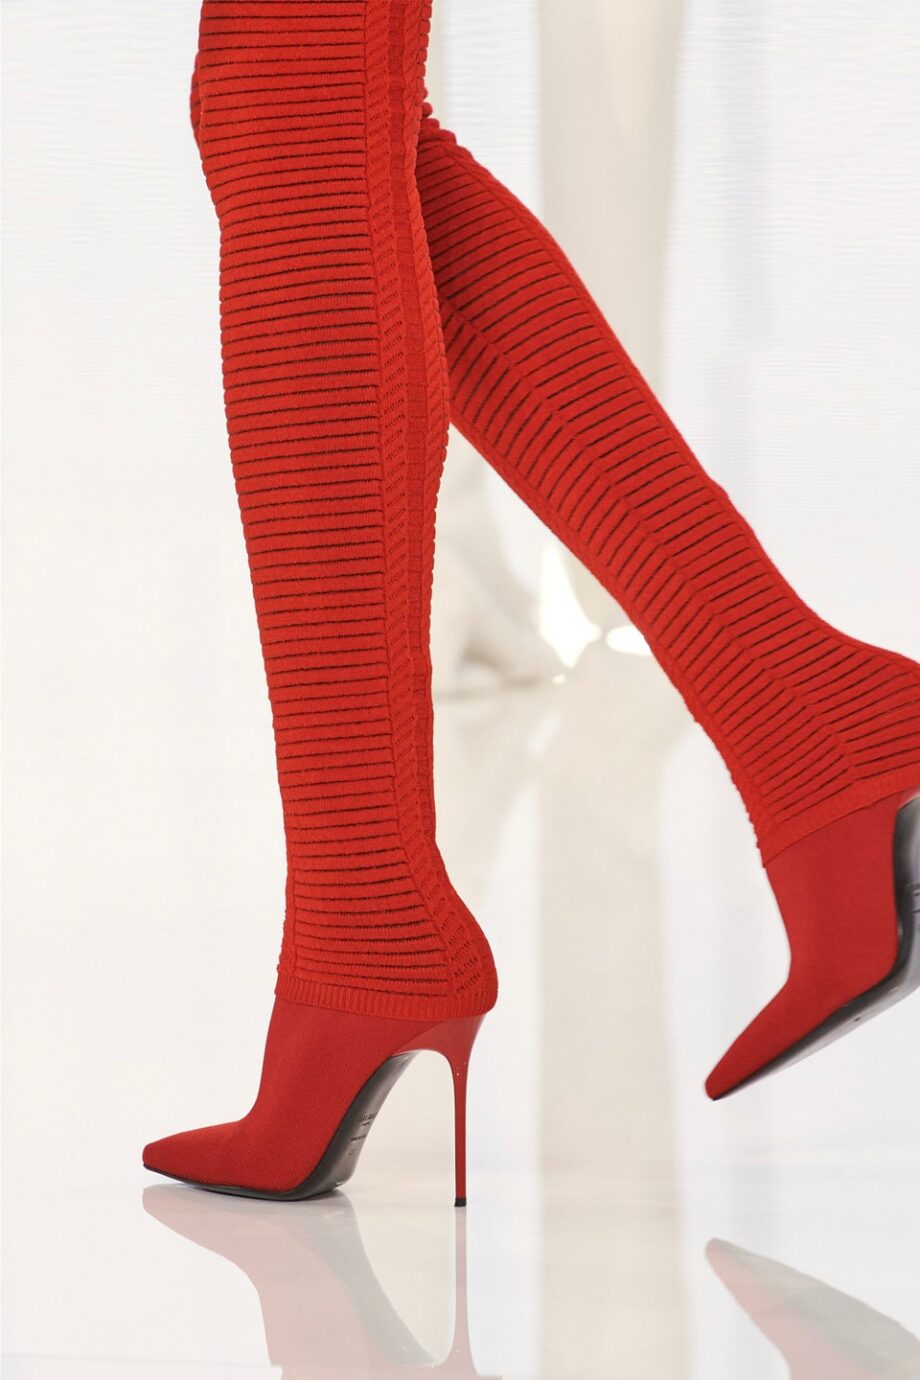 stiletto-heels-τα-7-must-have-ψηλοτάκουνα-της-άνοιξης-219346